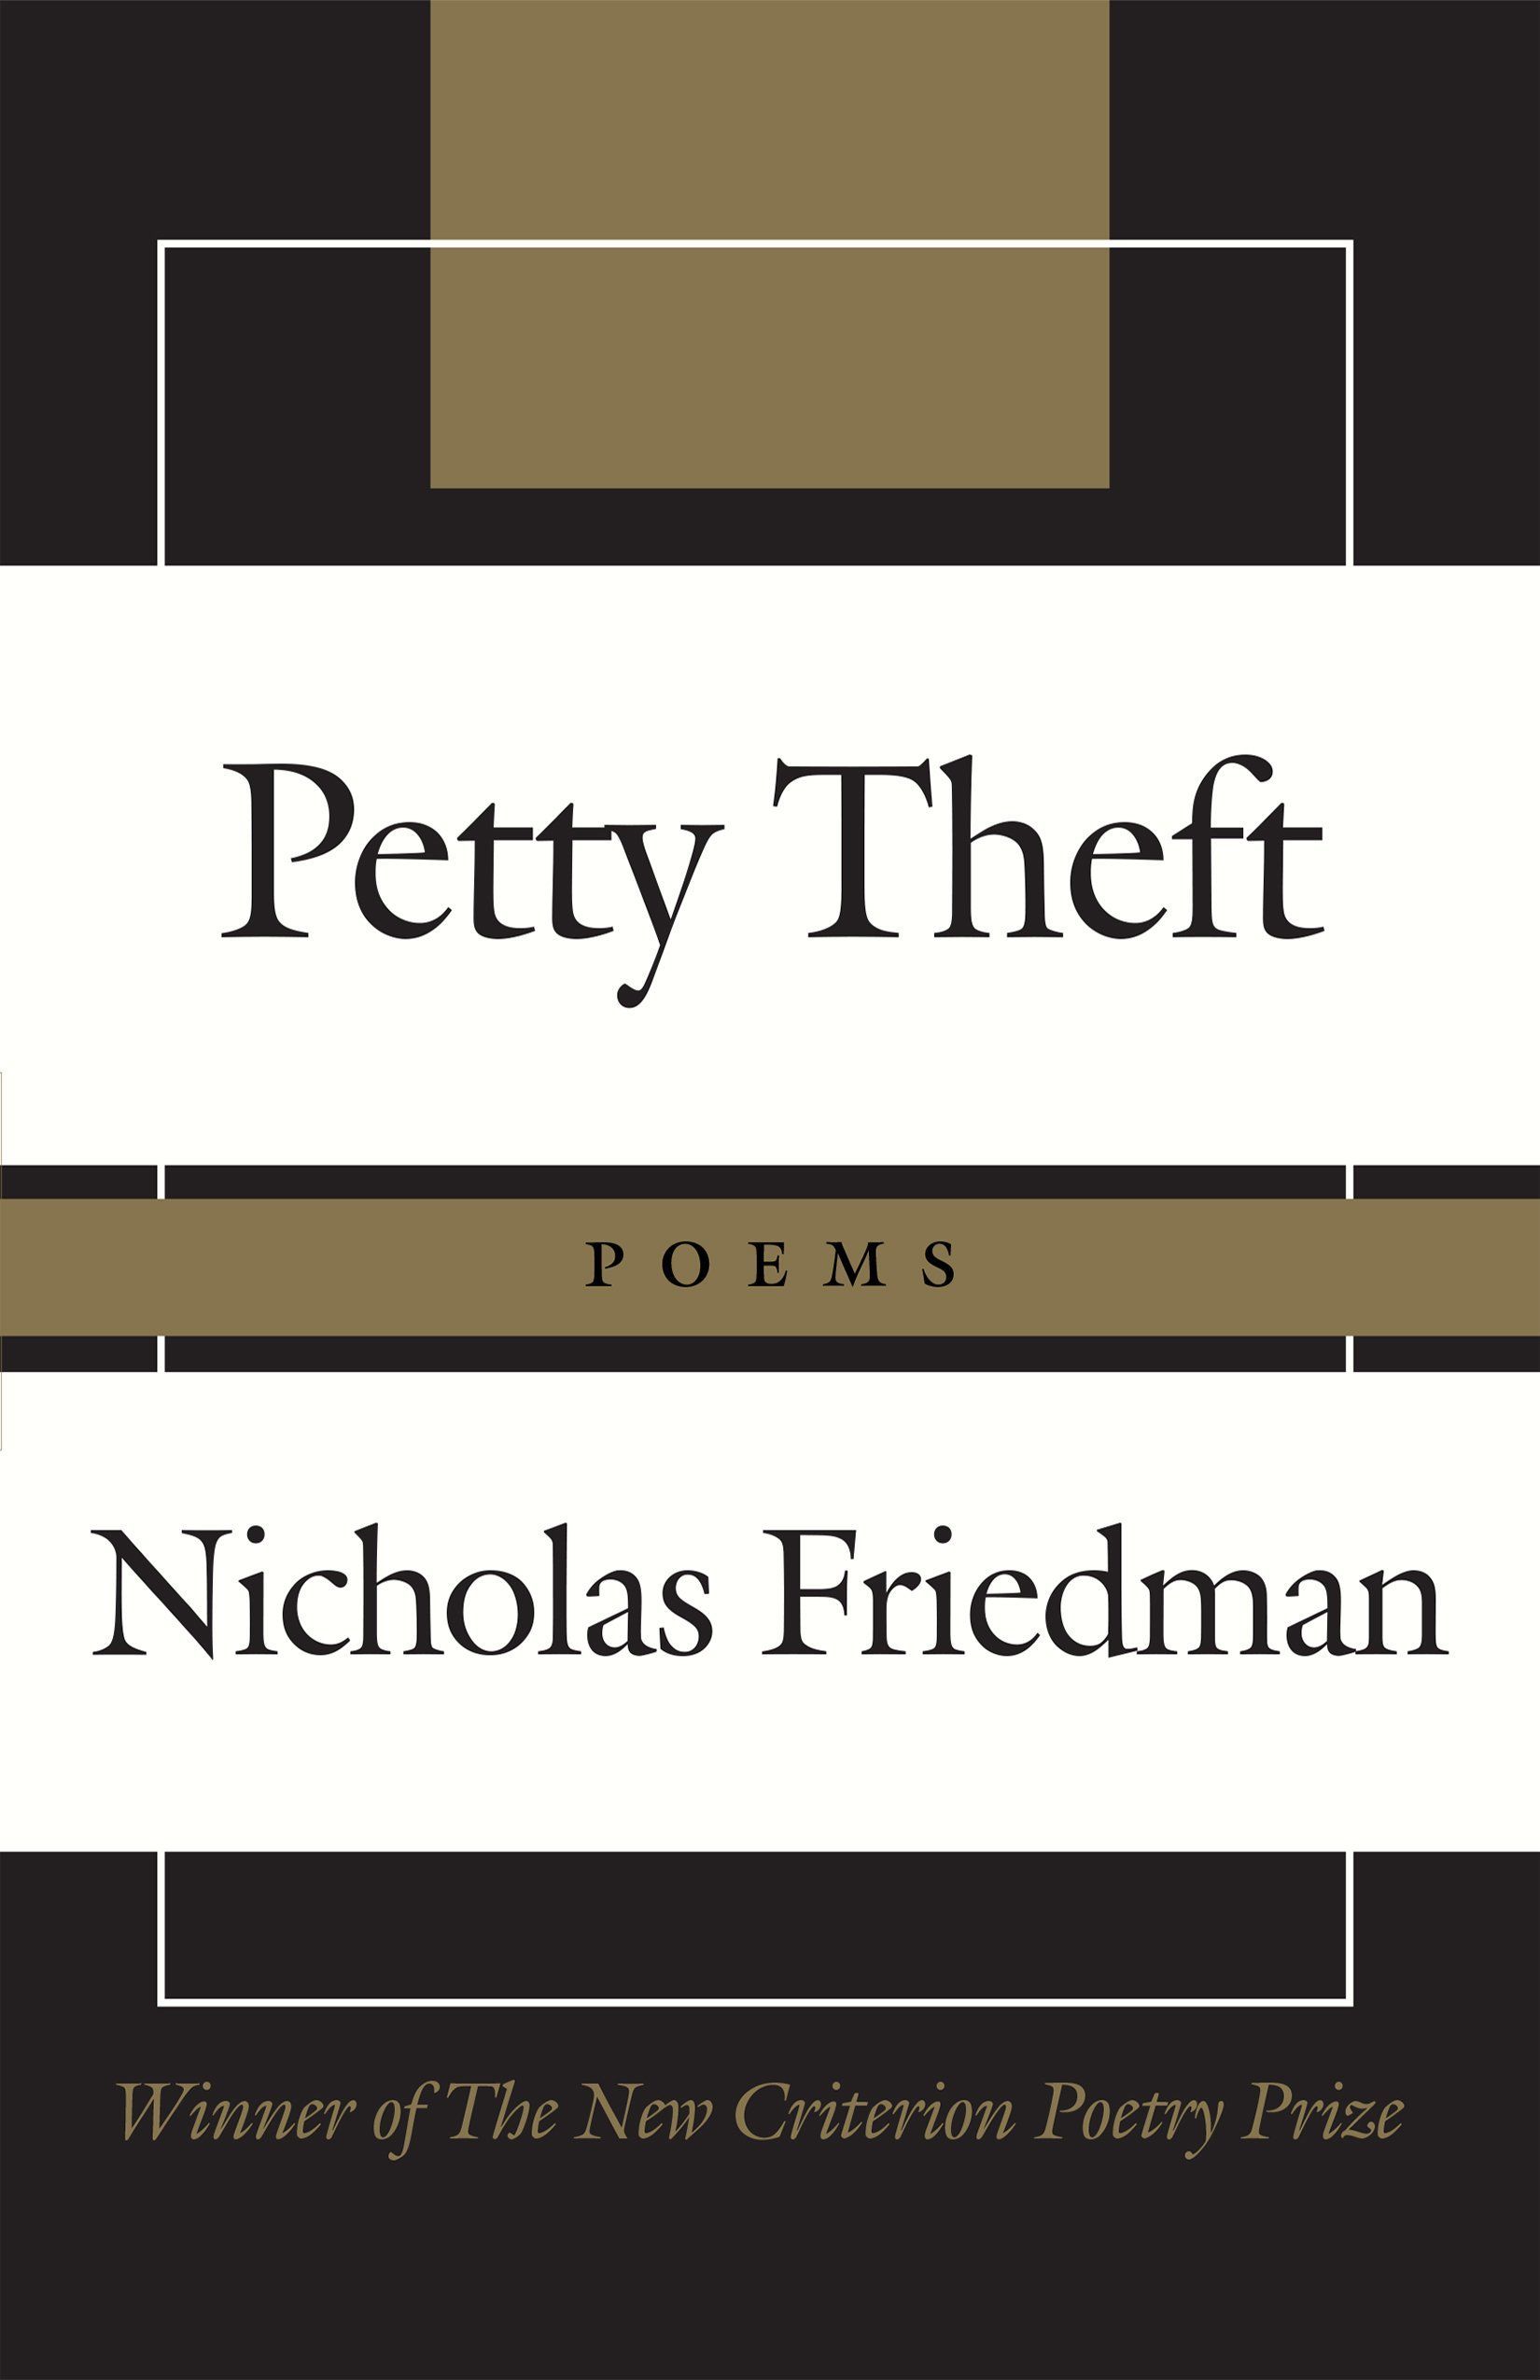 Homage, Not Larceny: On Nicholas Friedman’s “Petty Theft”